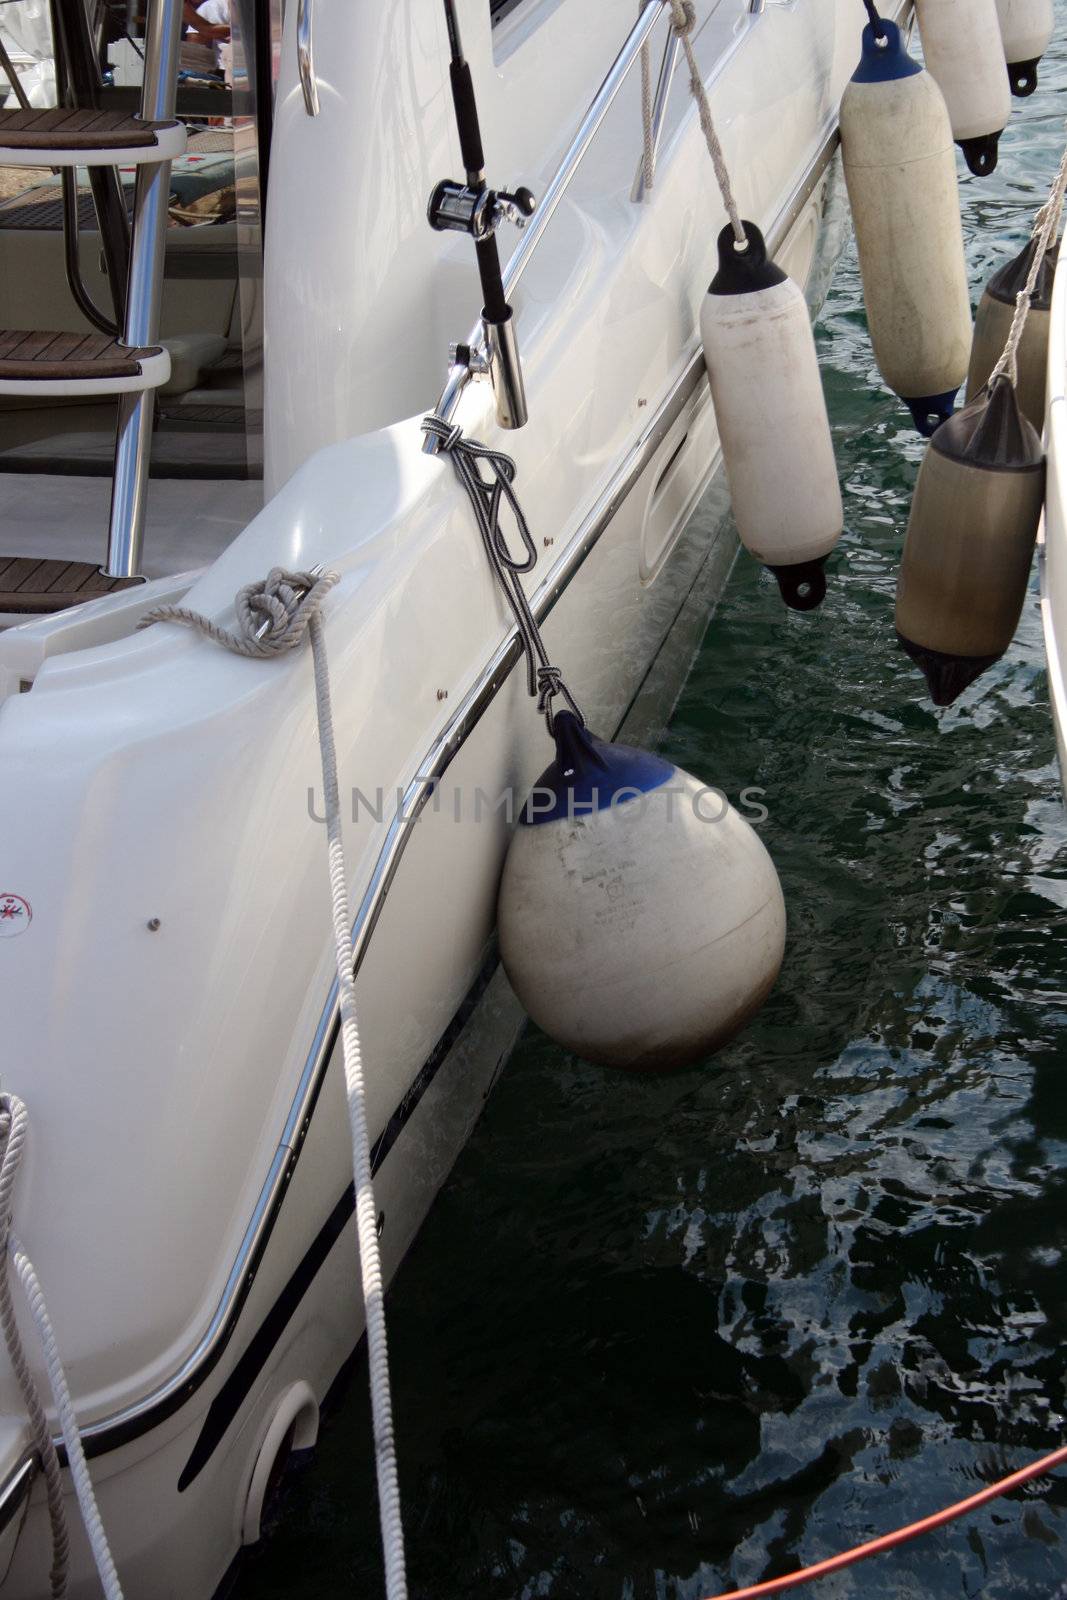 buoys on boat by keki